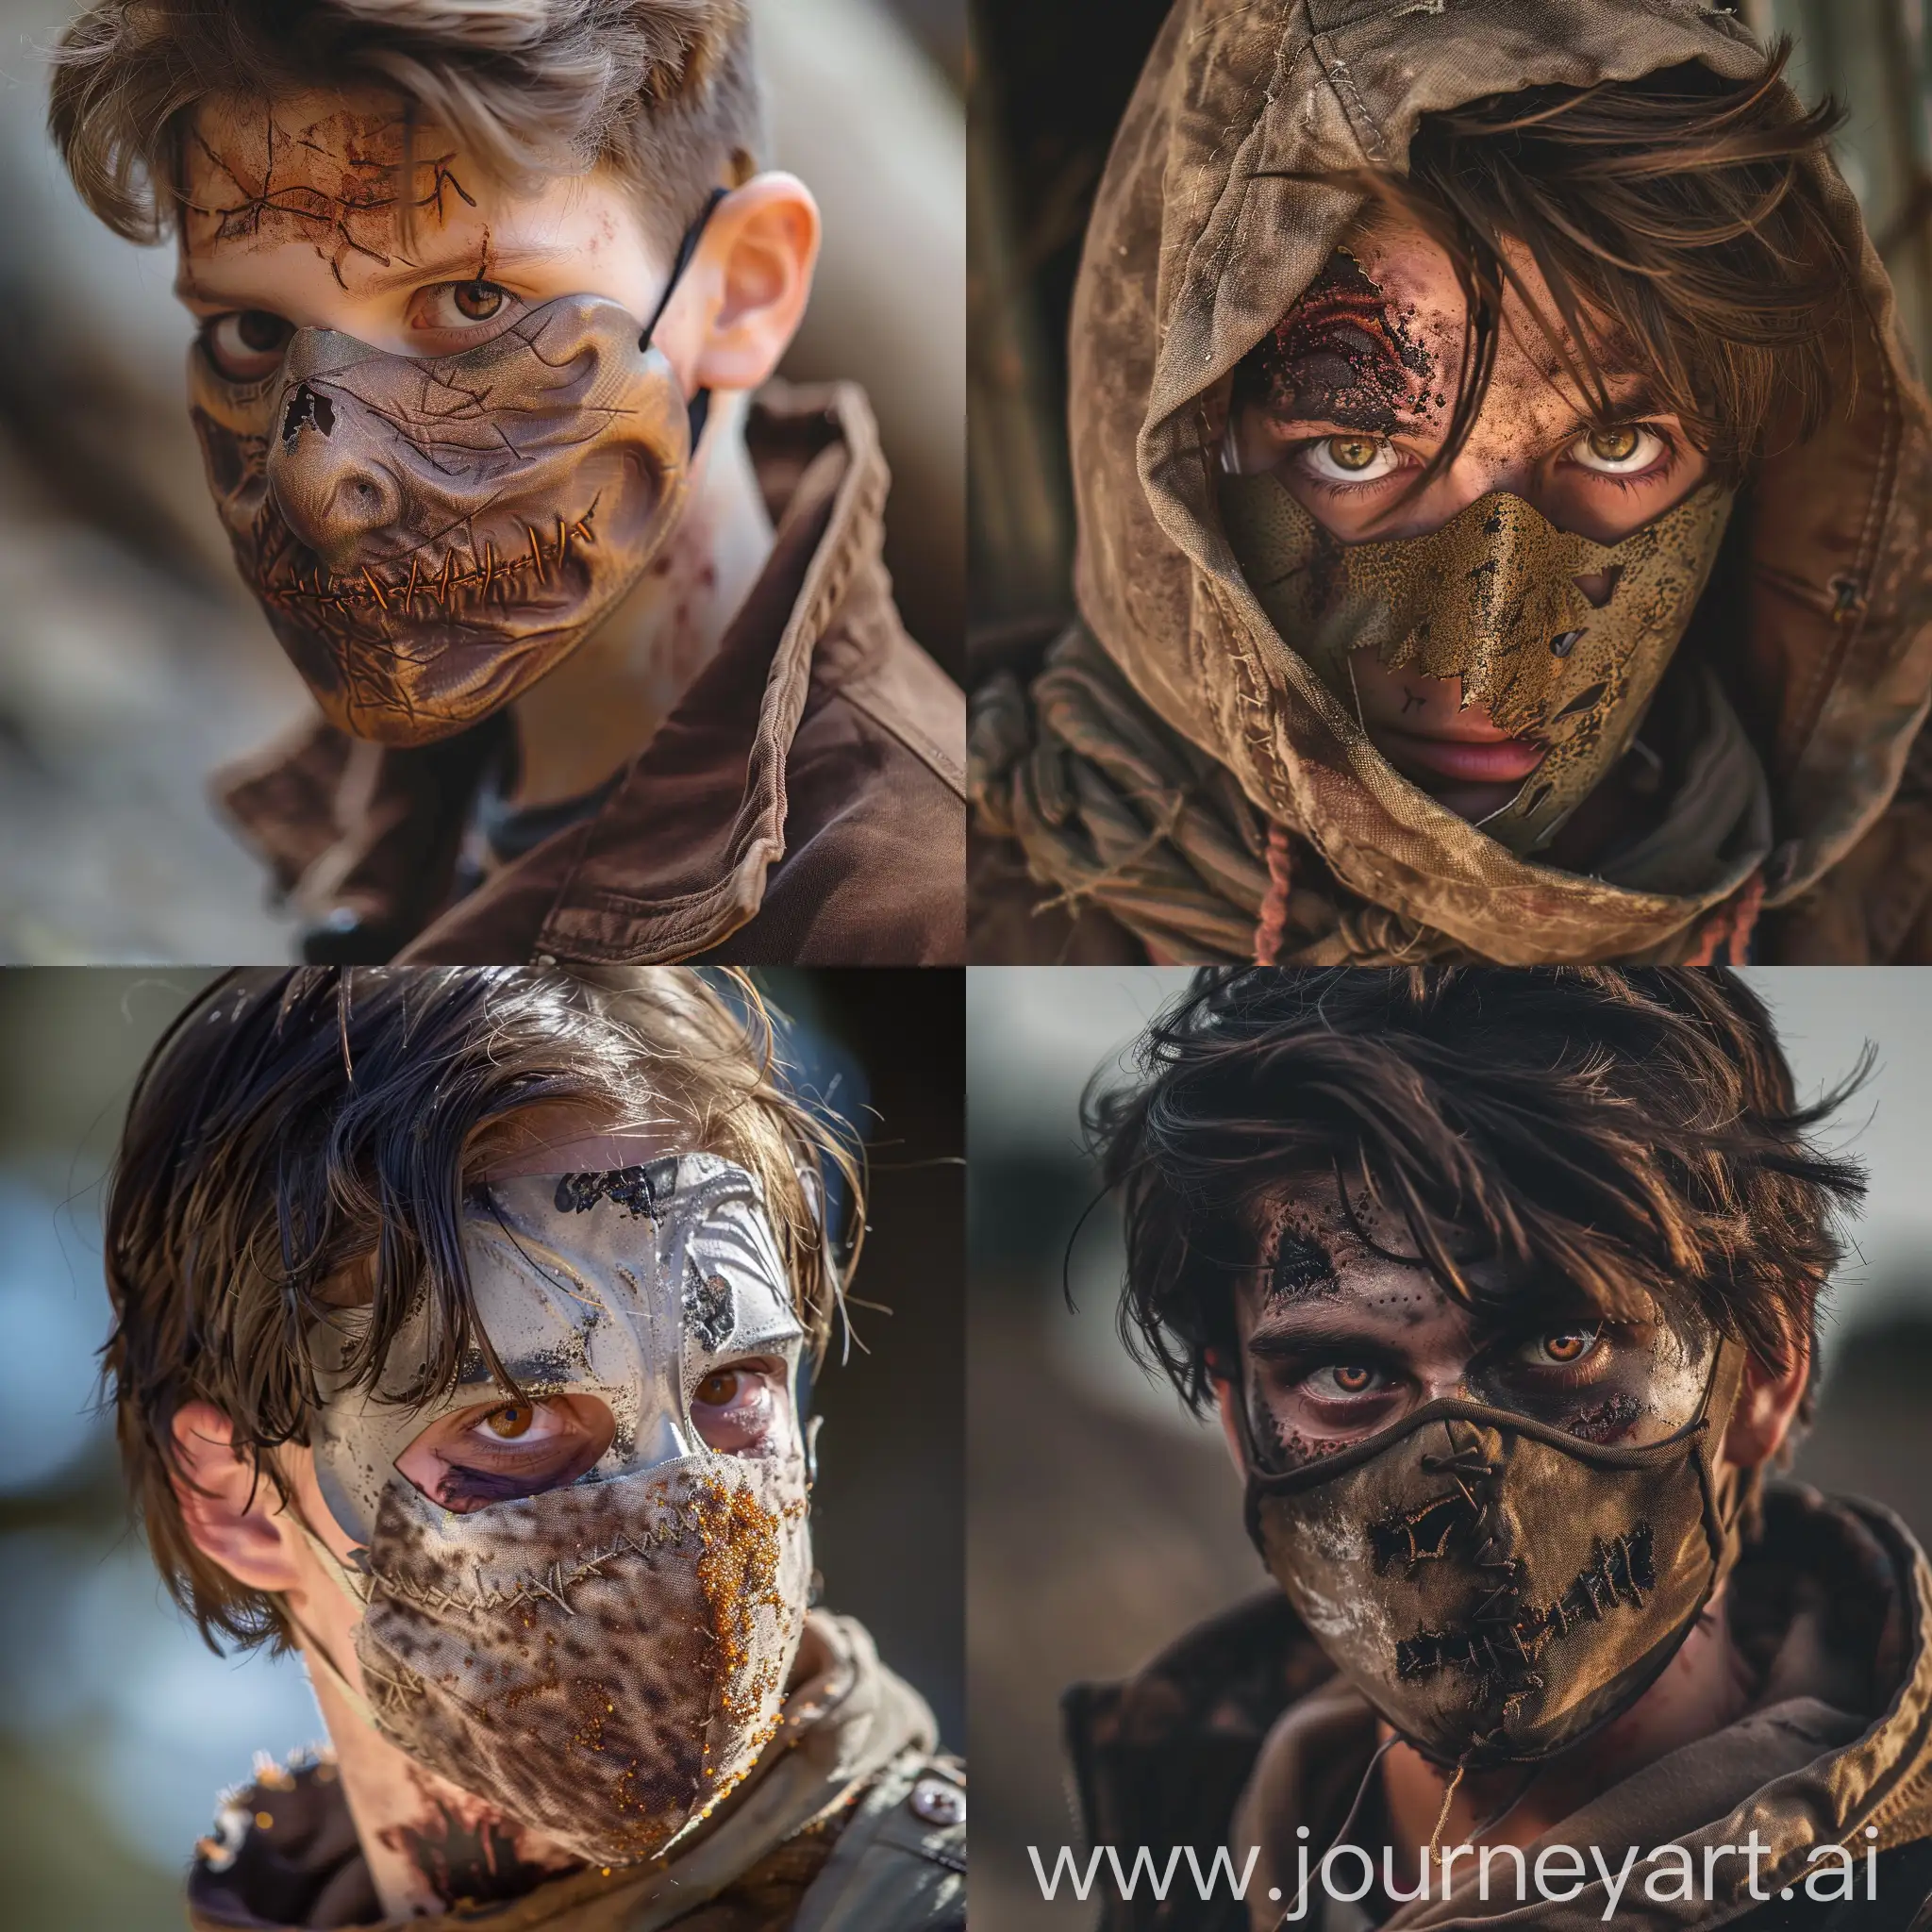 Teen zombie man in mask with brown eyes and hair in brown jakcet